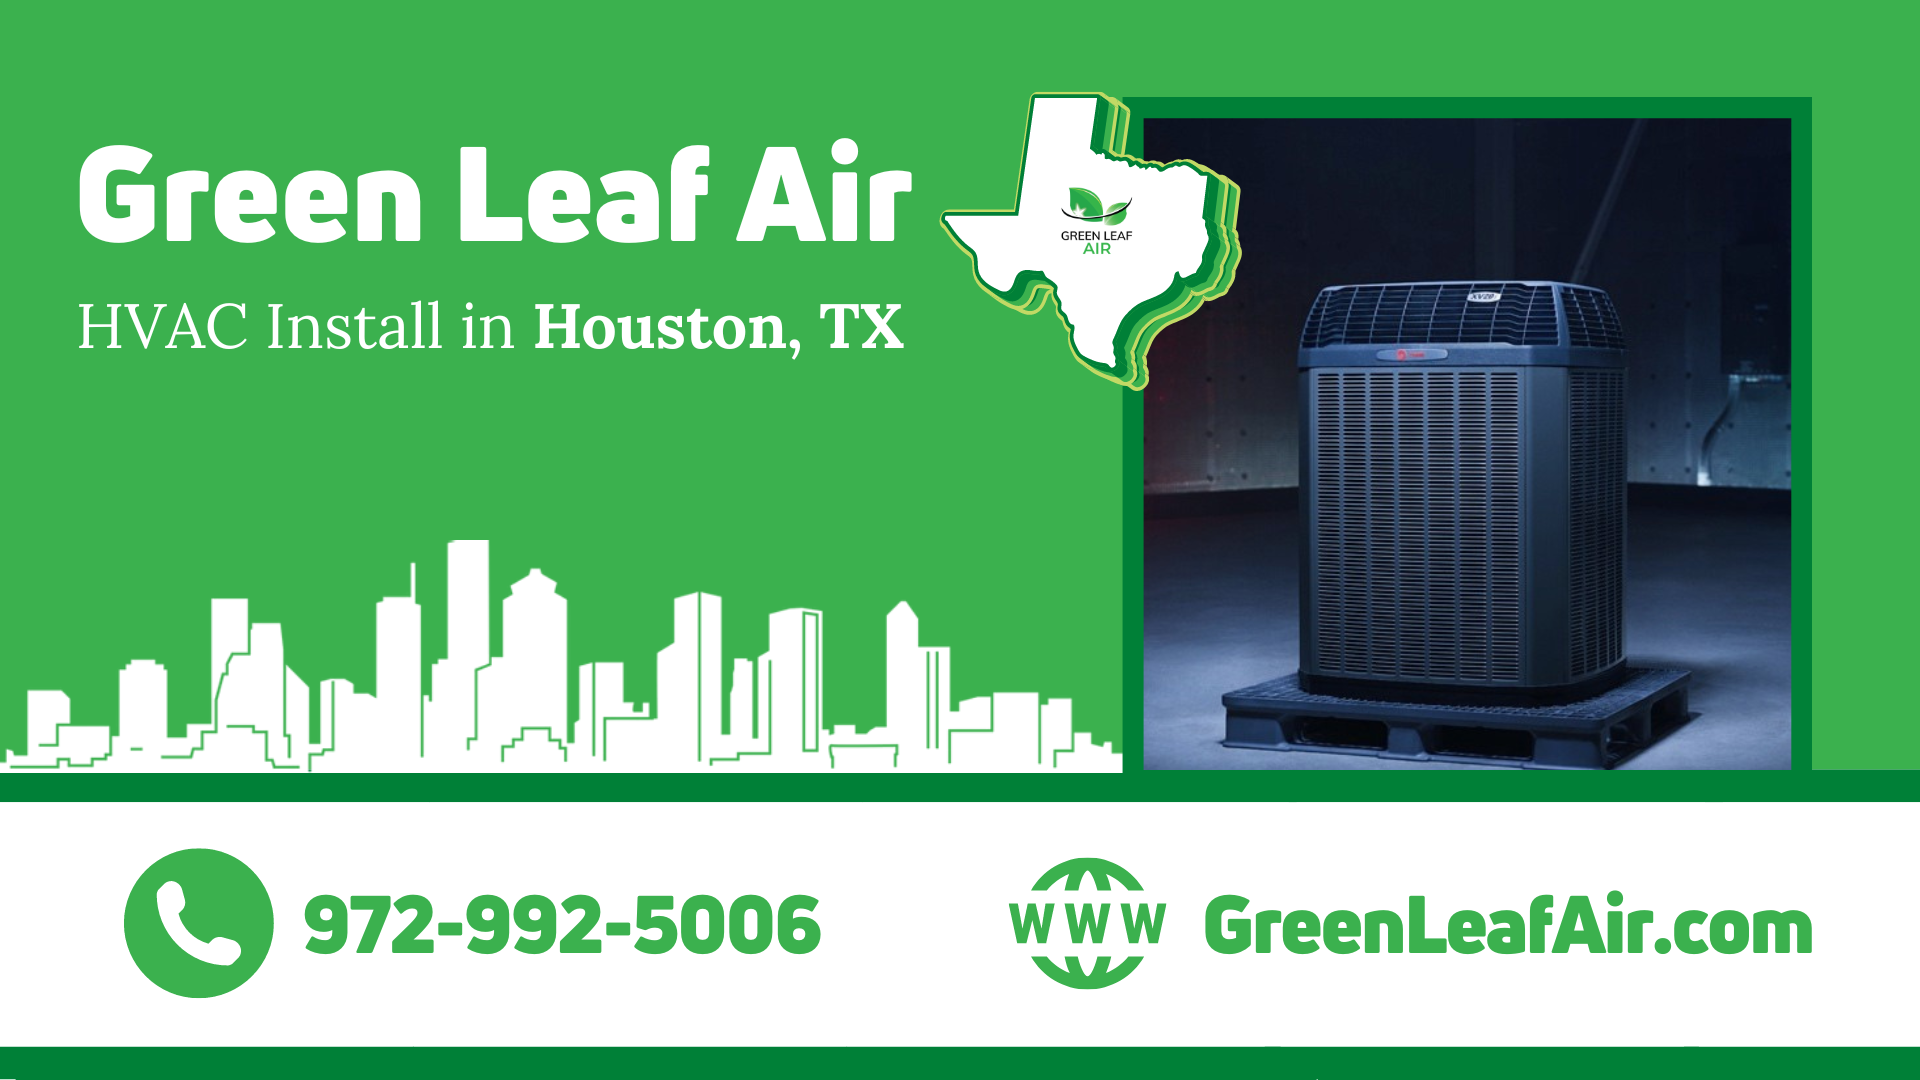 Green Leaf Air — HVAC Install in Houston, Texas